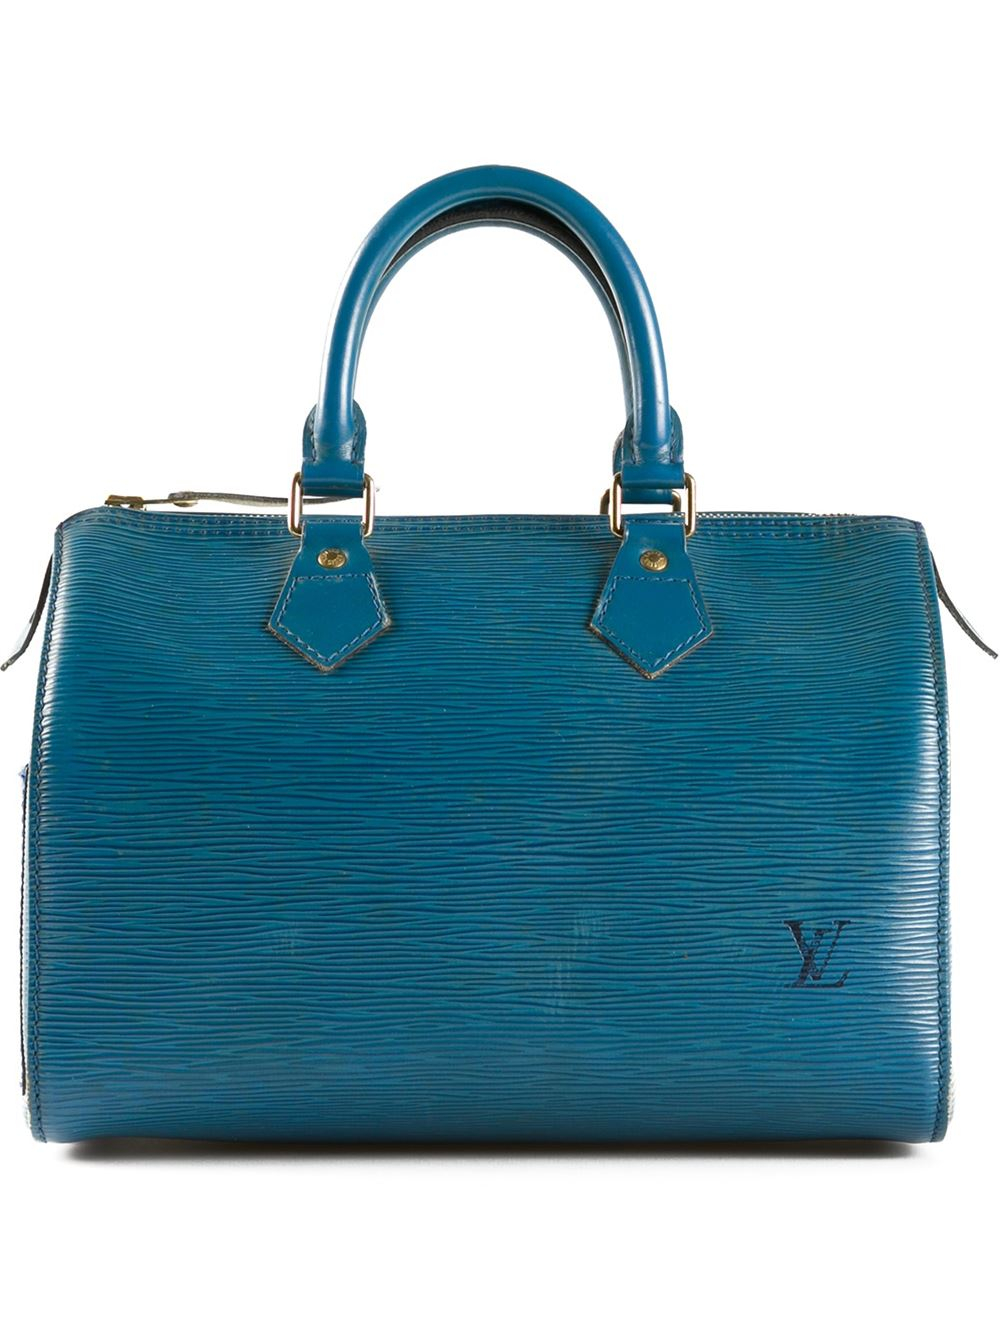 Louis Vuitton 'Speedy 25' Bag in Blue